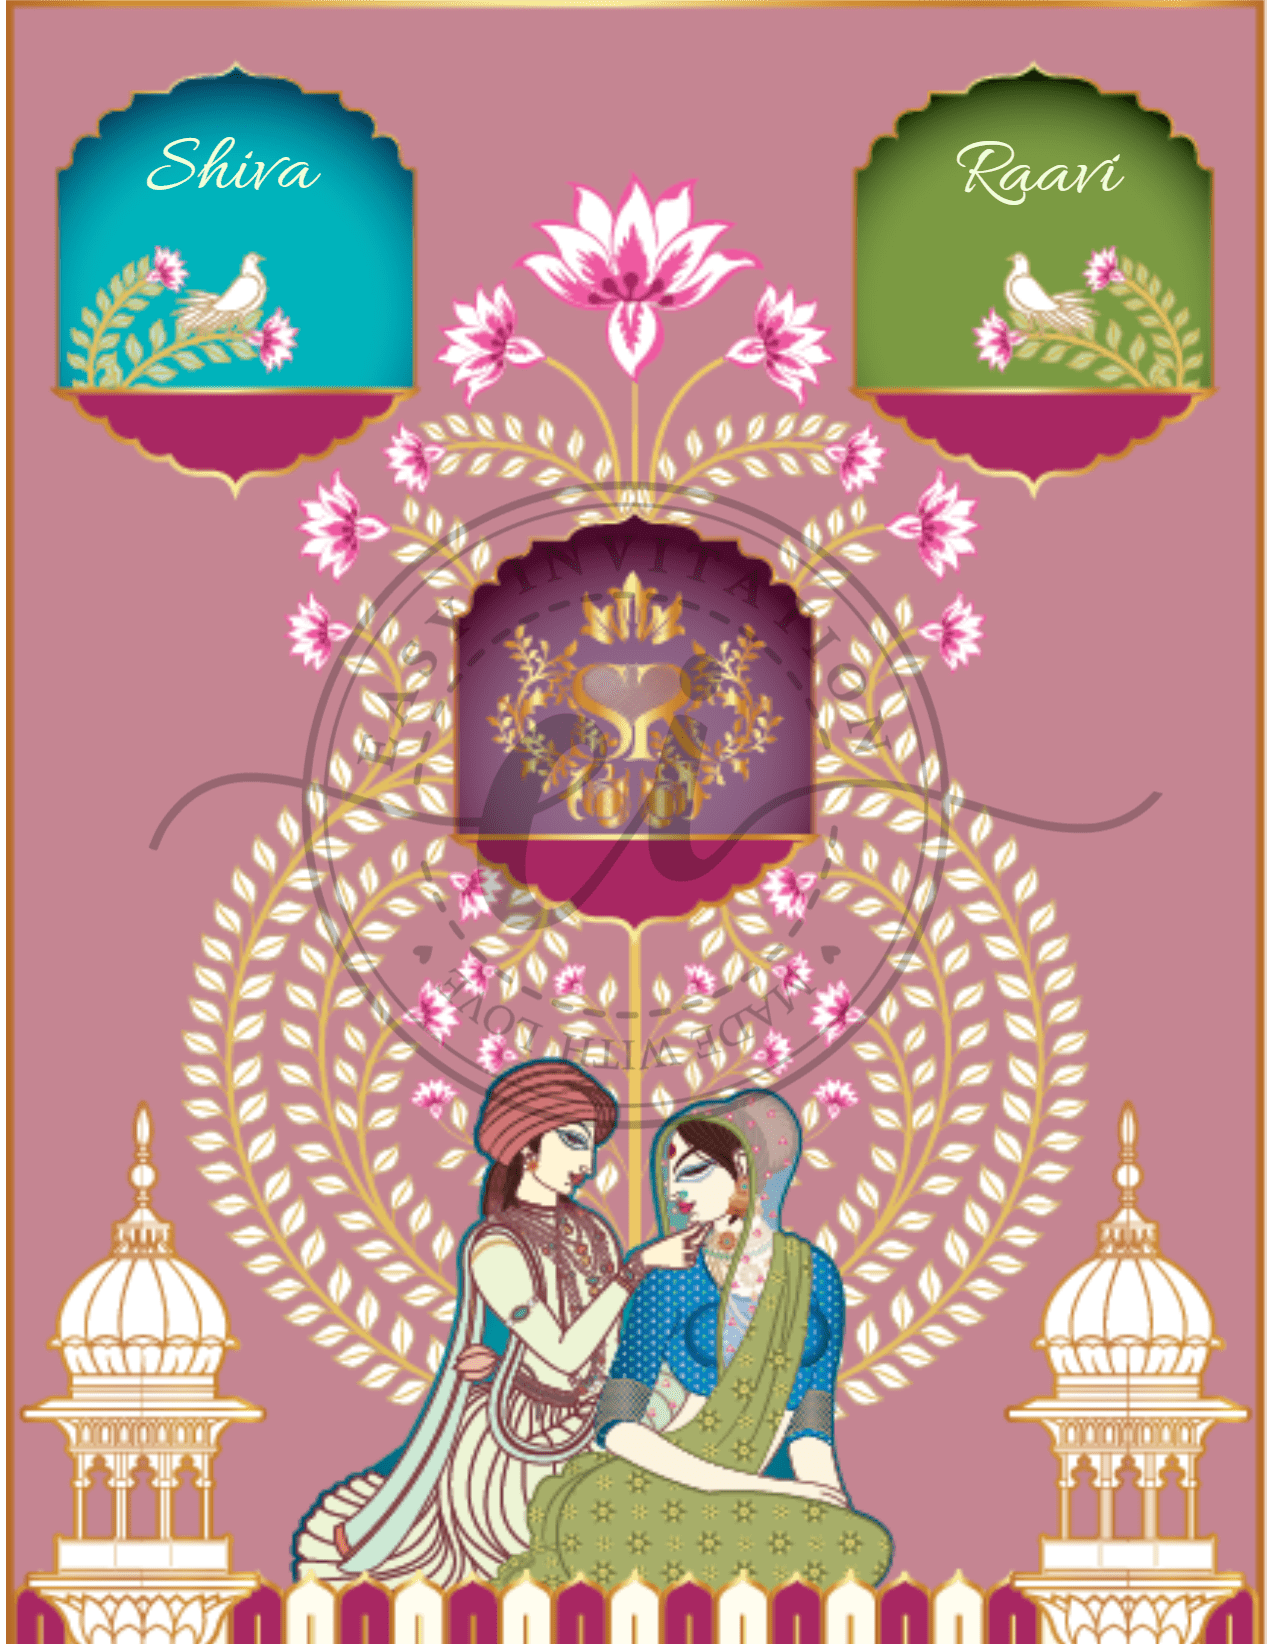 Royal Indian Wedding Invitation Card